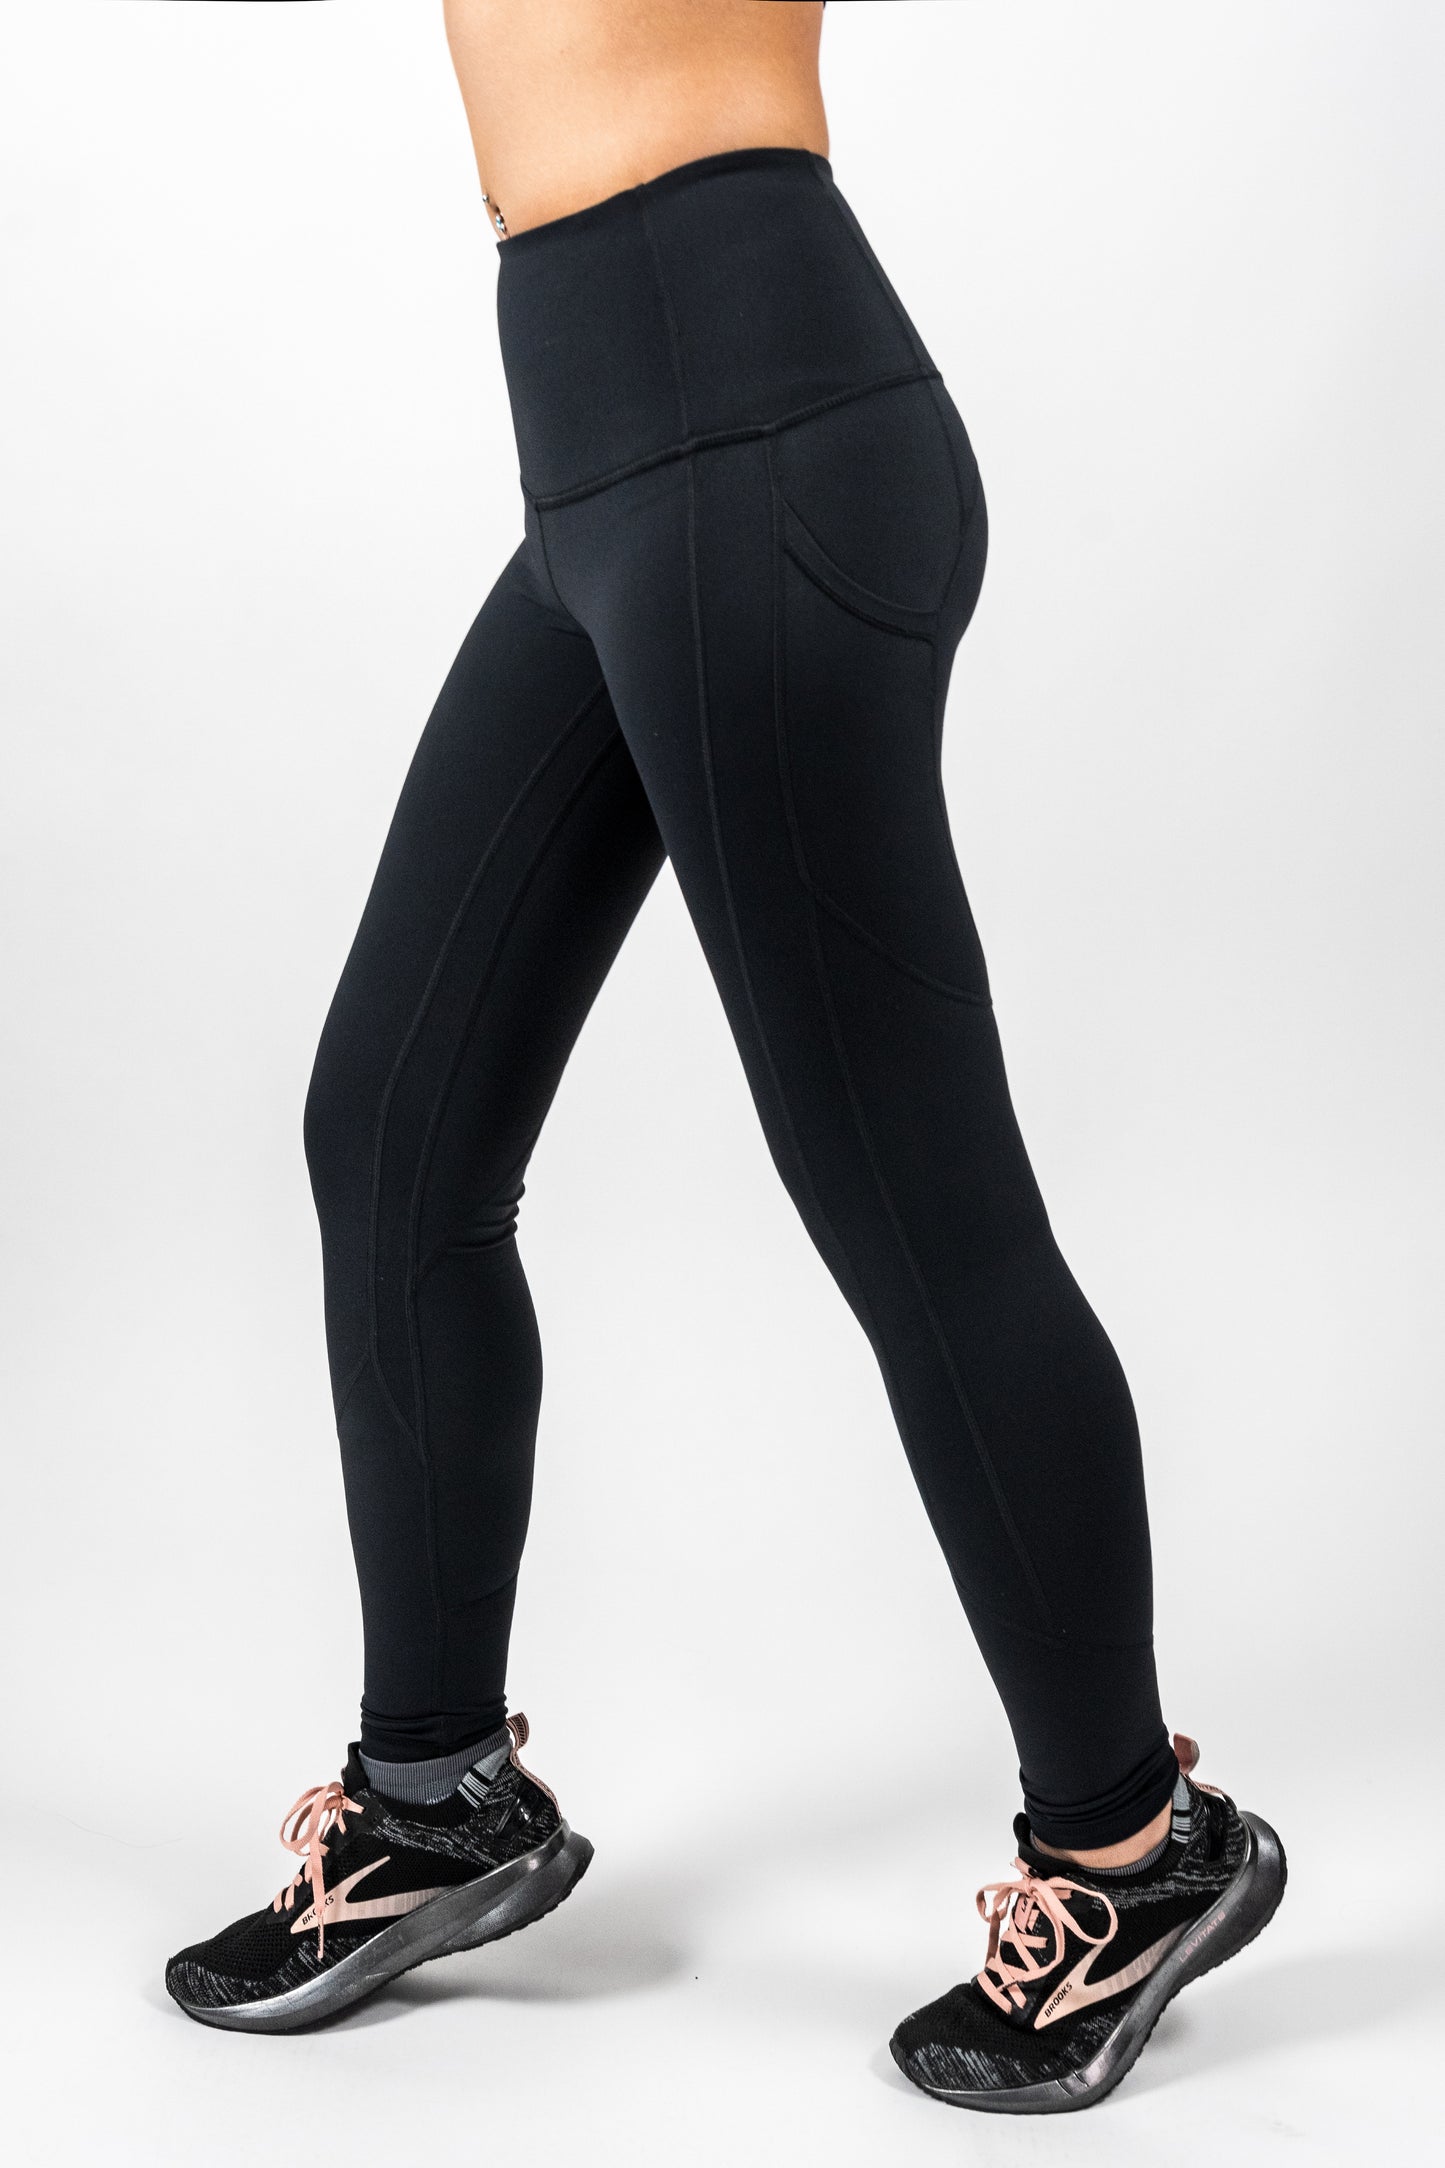 Best fitting comfortable athletic women's leggings